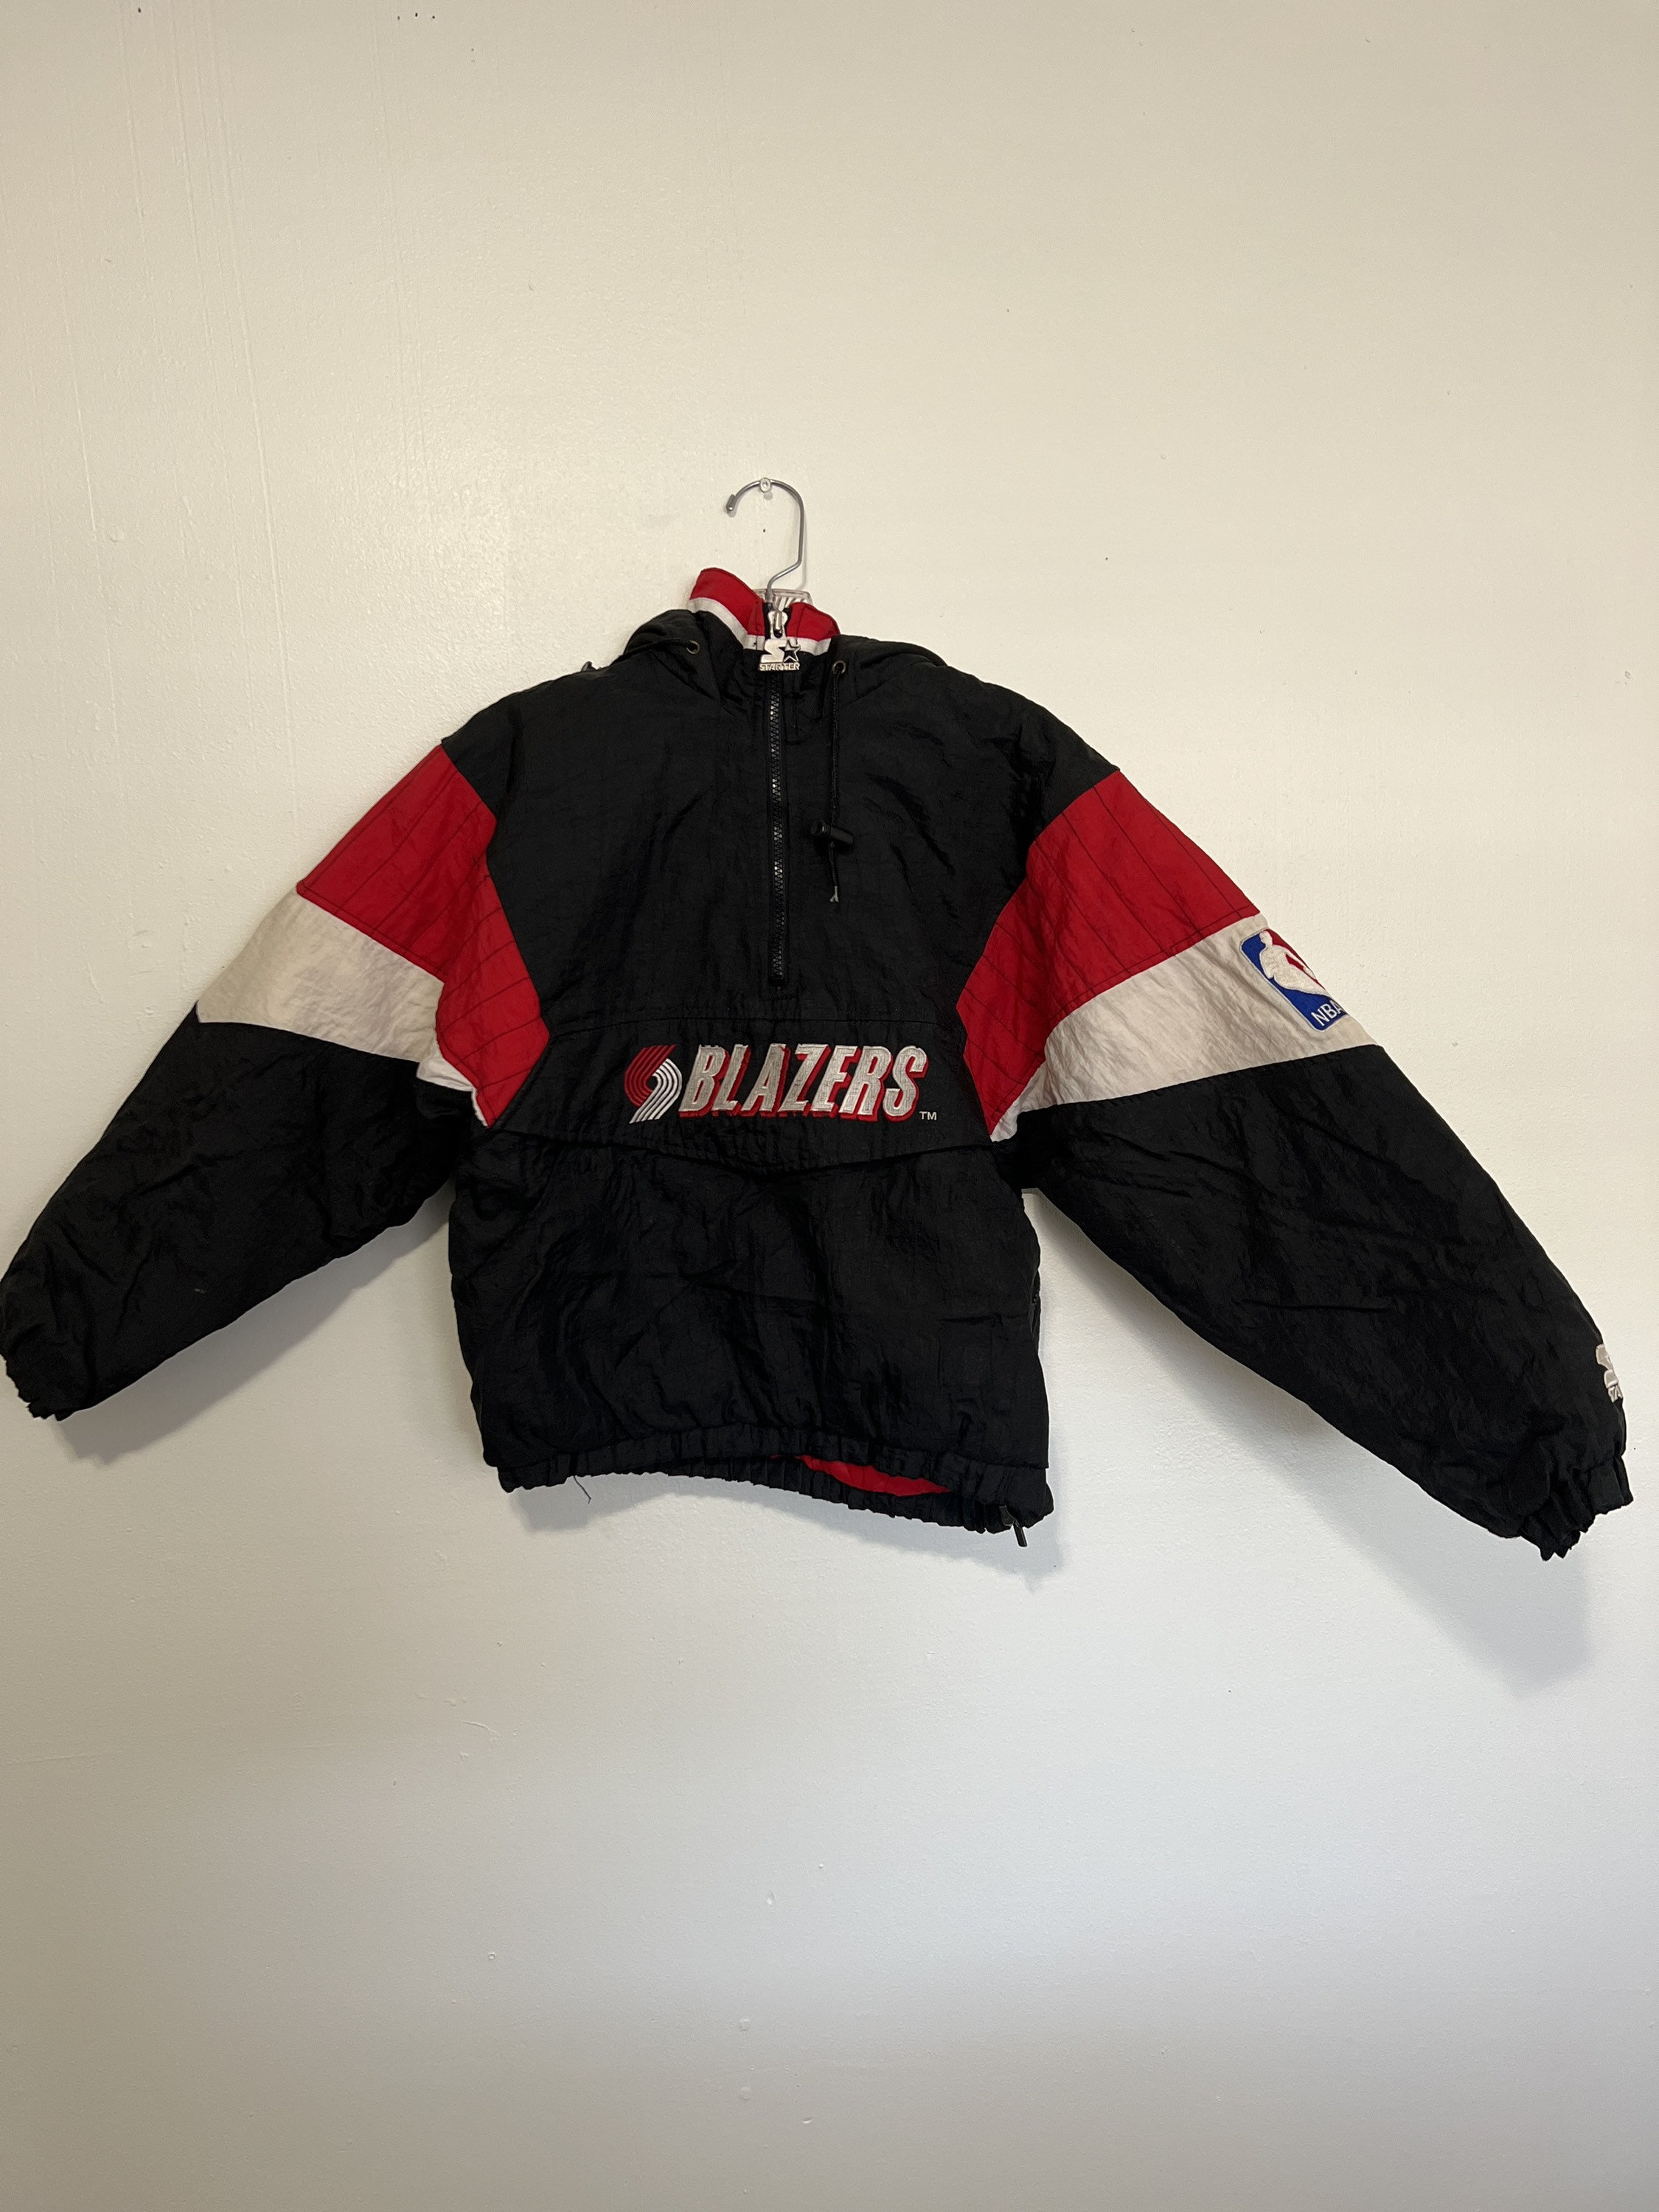 Portland Trail Blazers Vintage 80s Starter Satin Bomber Jacket - Very Rare - NBA Basketball Black Red Coat - Men's Size XL 